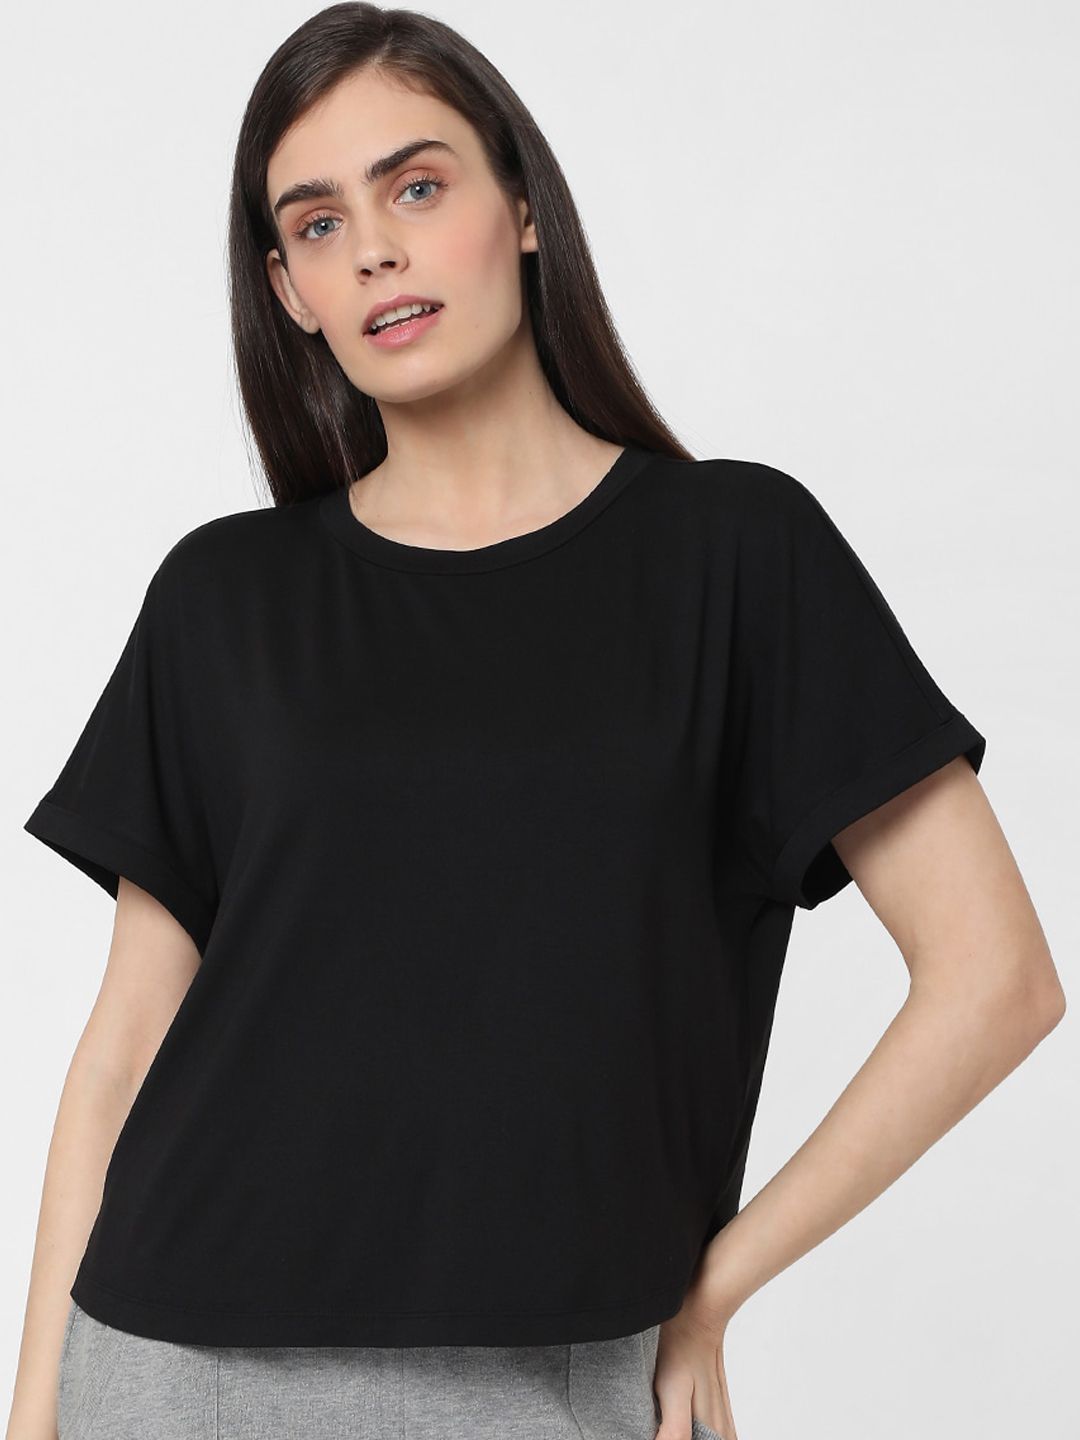 Vero Moda Women Black Solid Lounge T-shirt Price in India